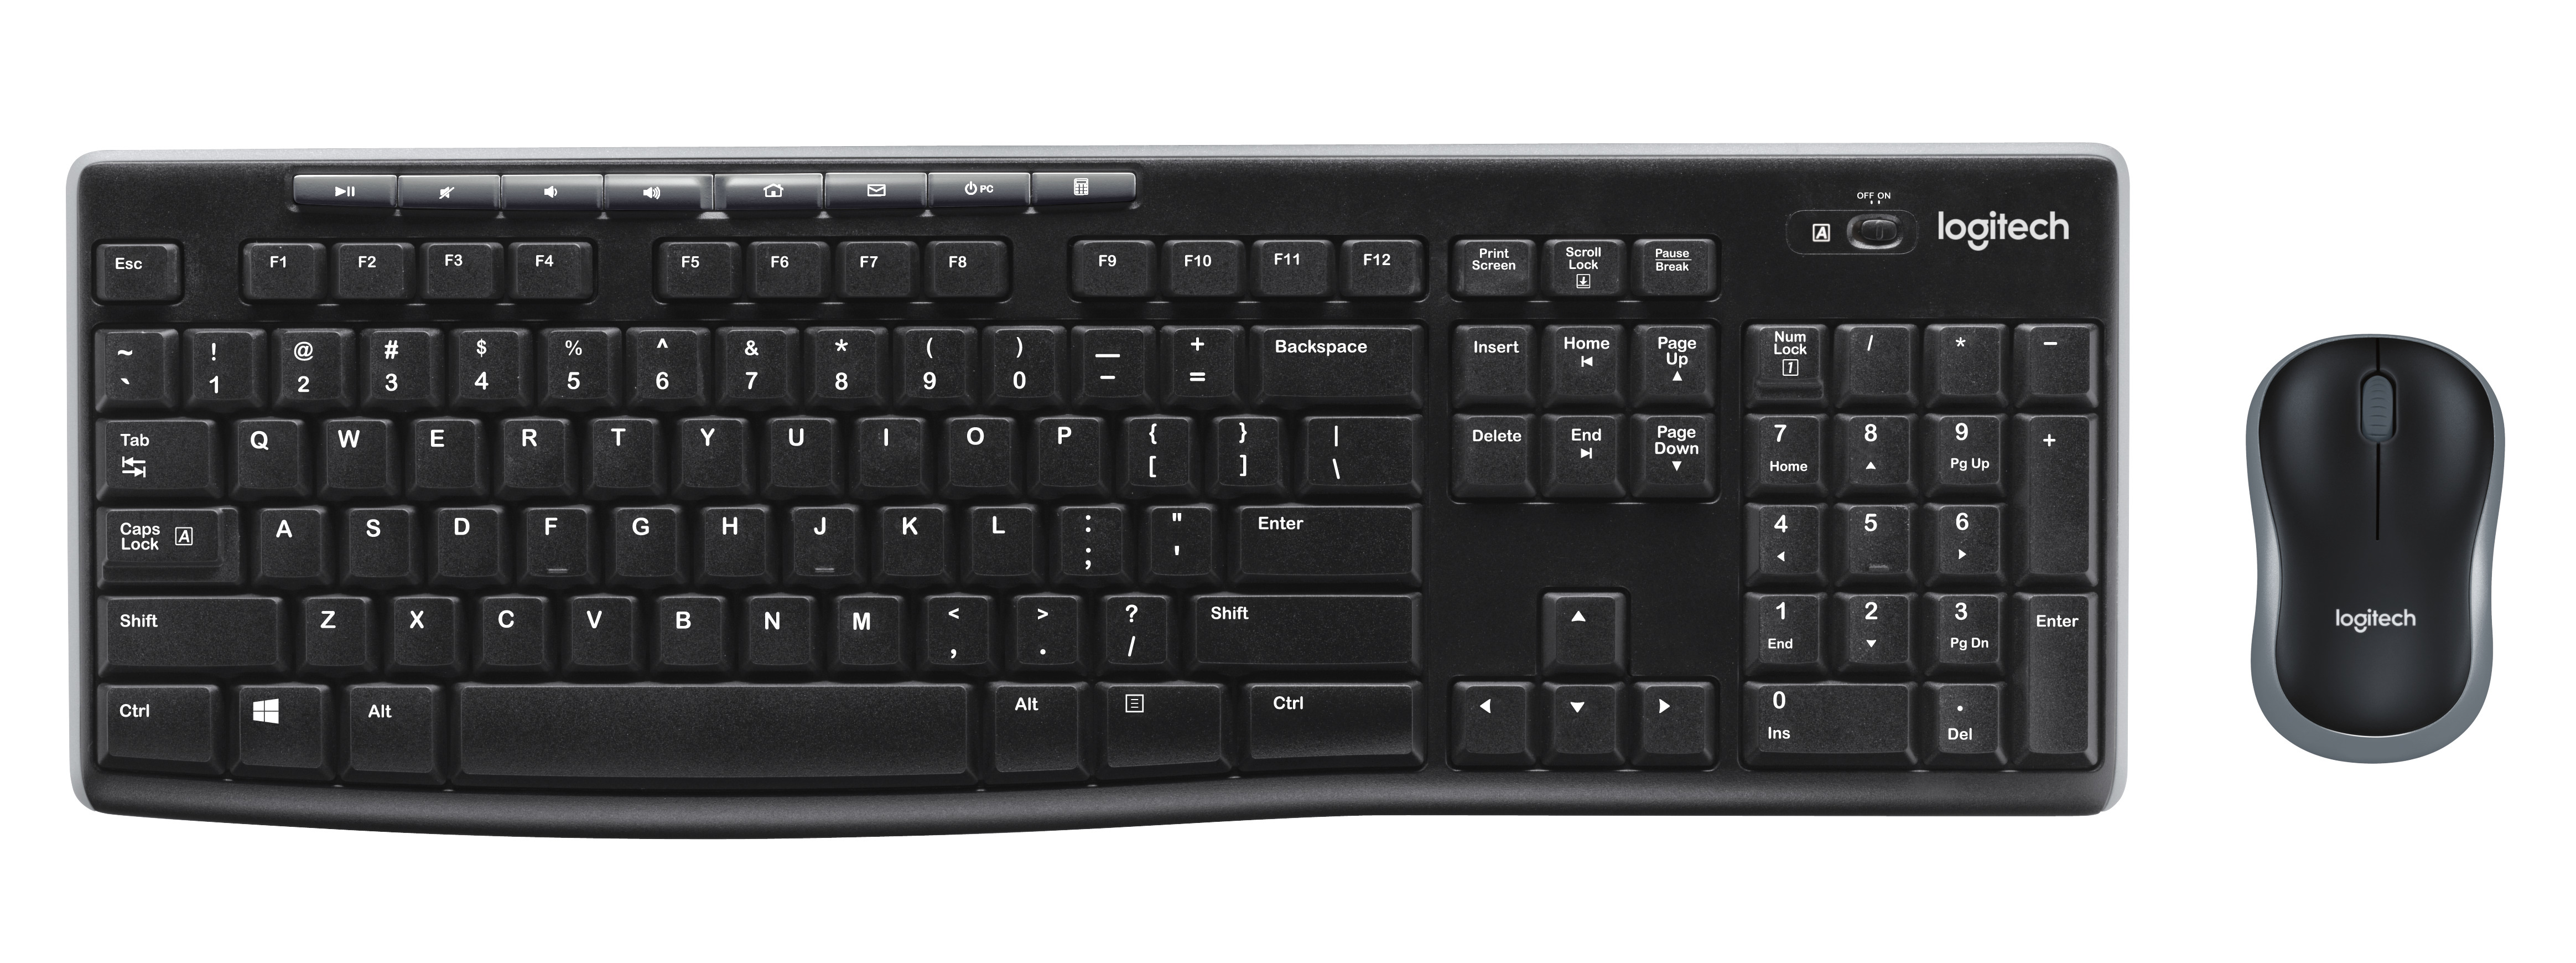 MK270 keyboard | eBay